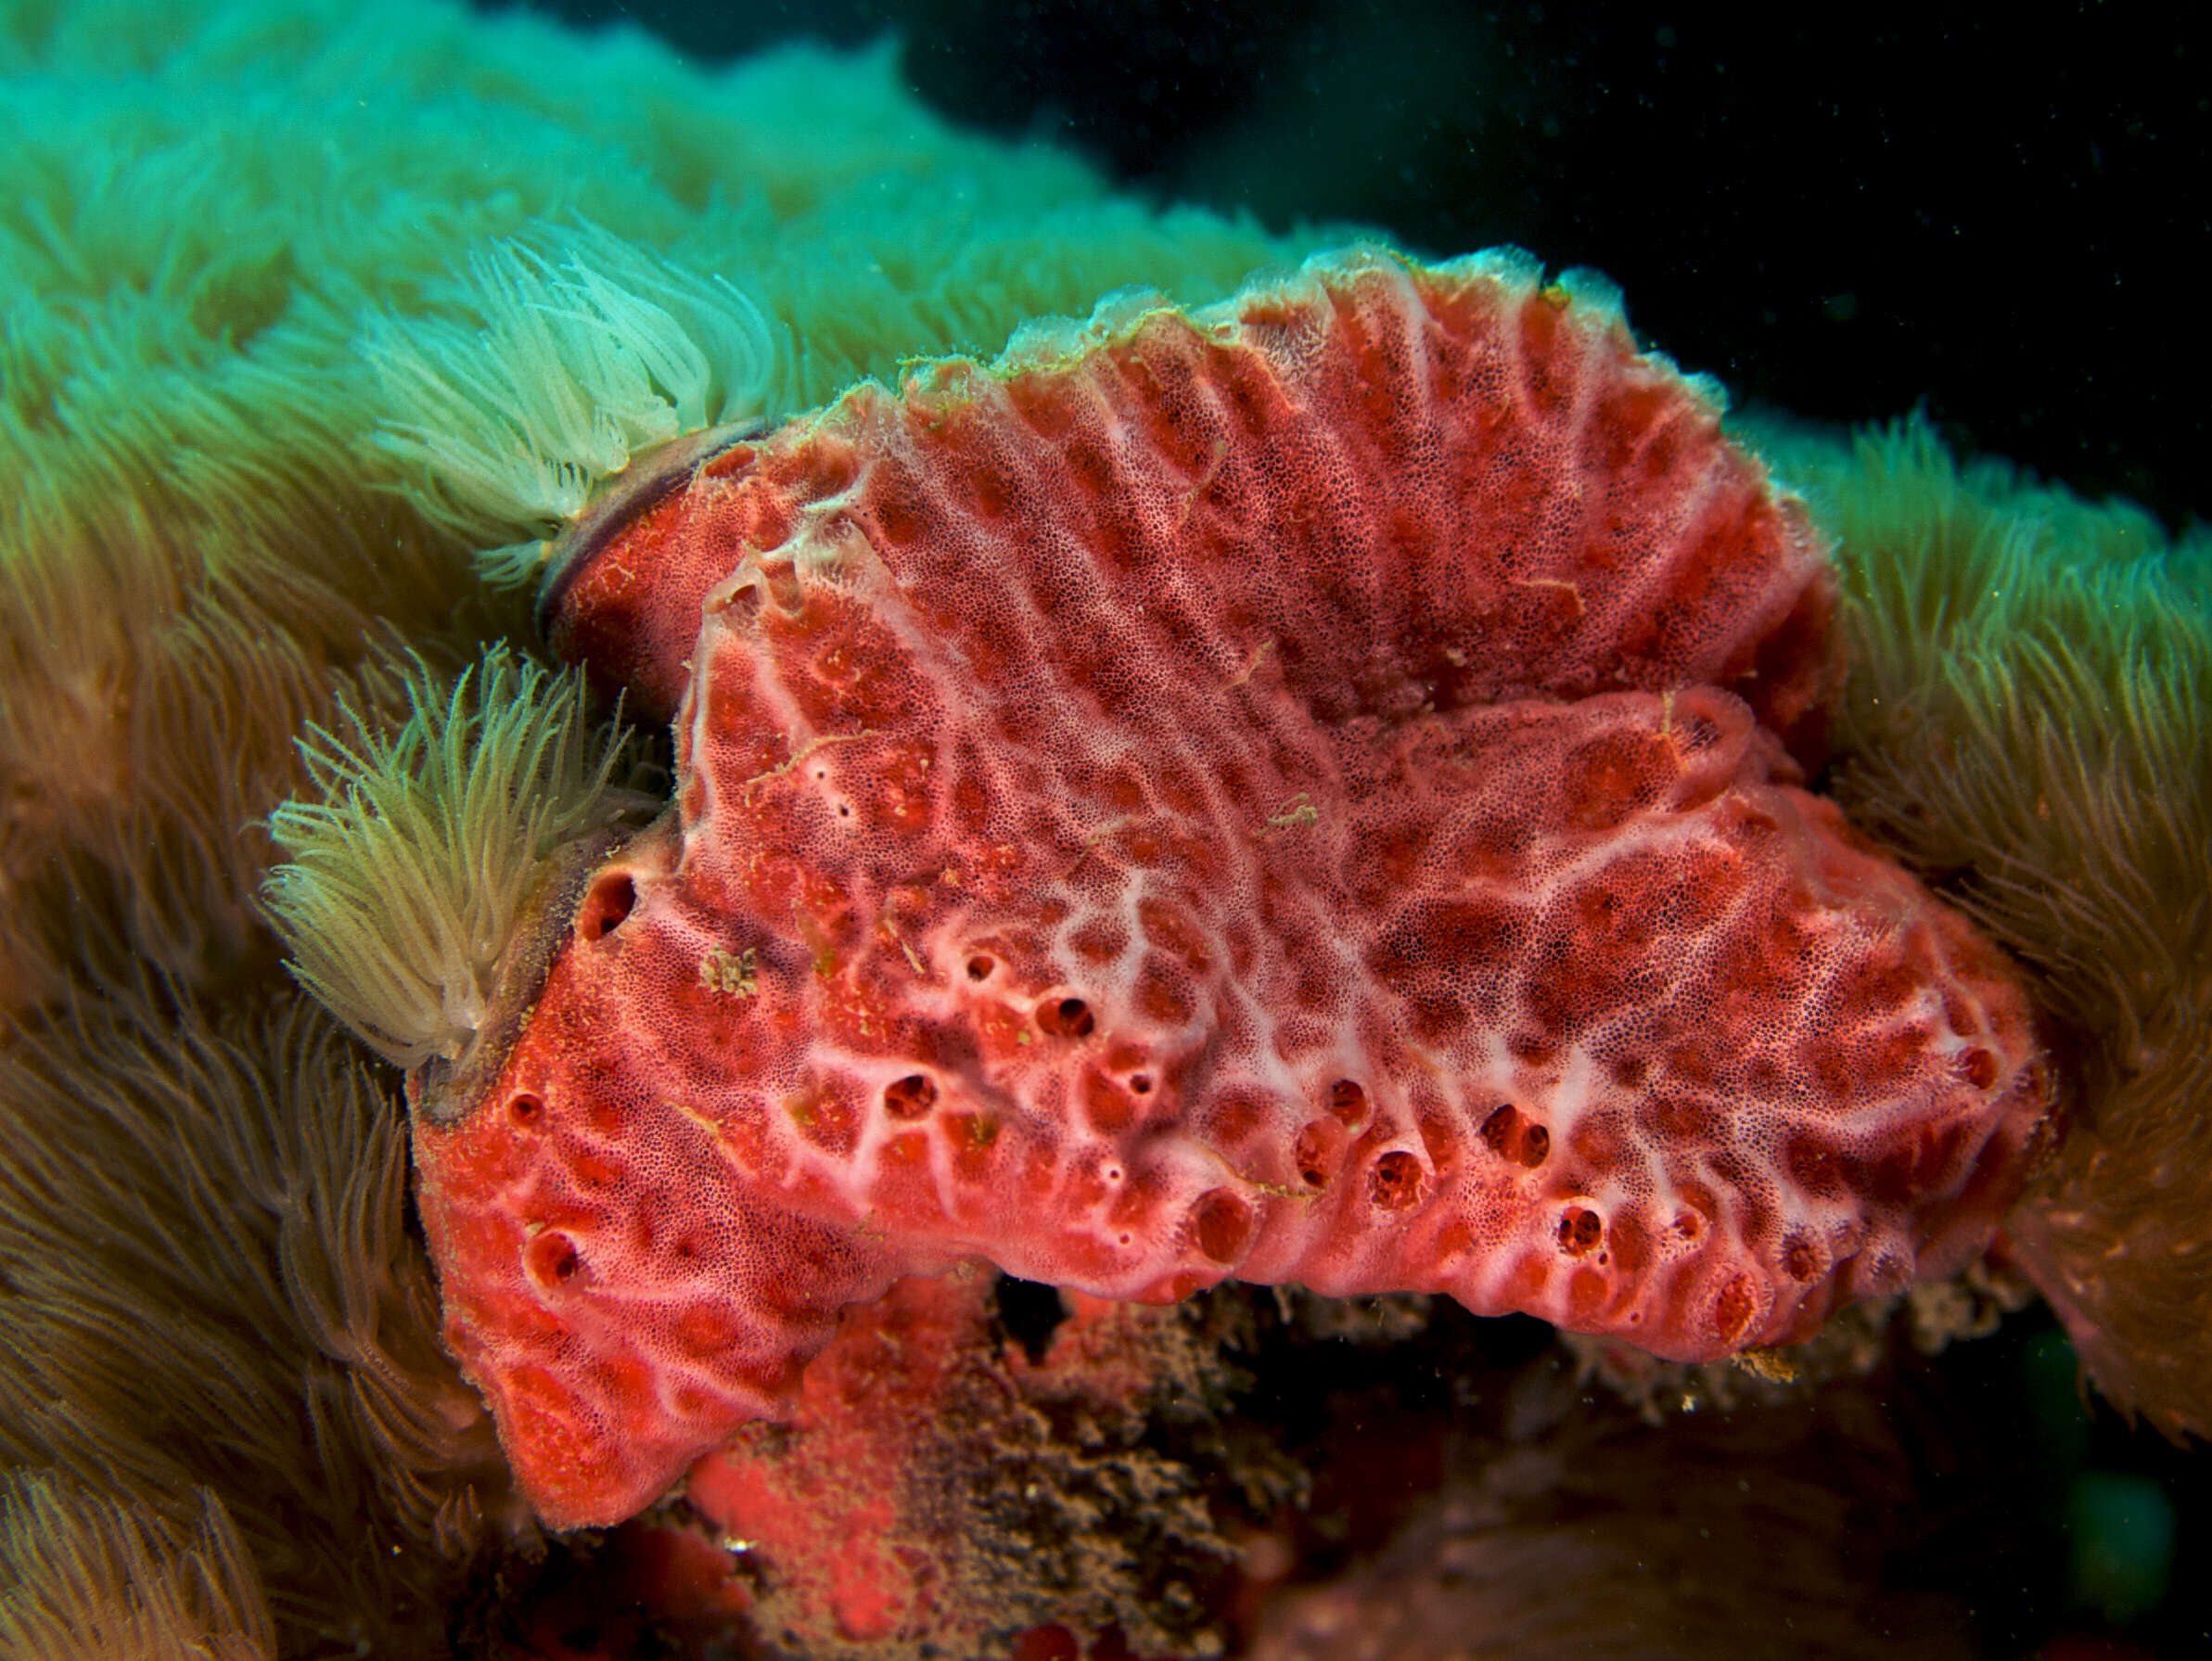 Image of red-white marbled sponge